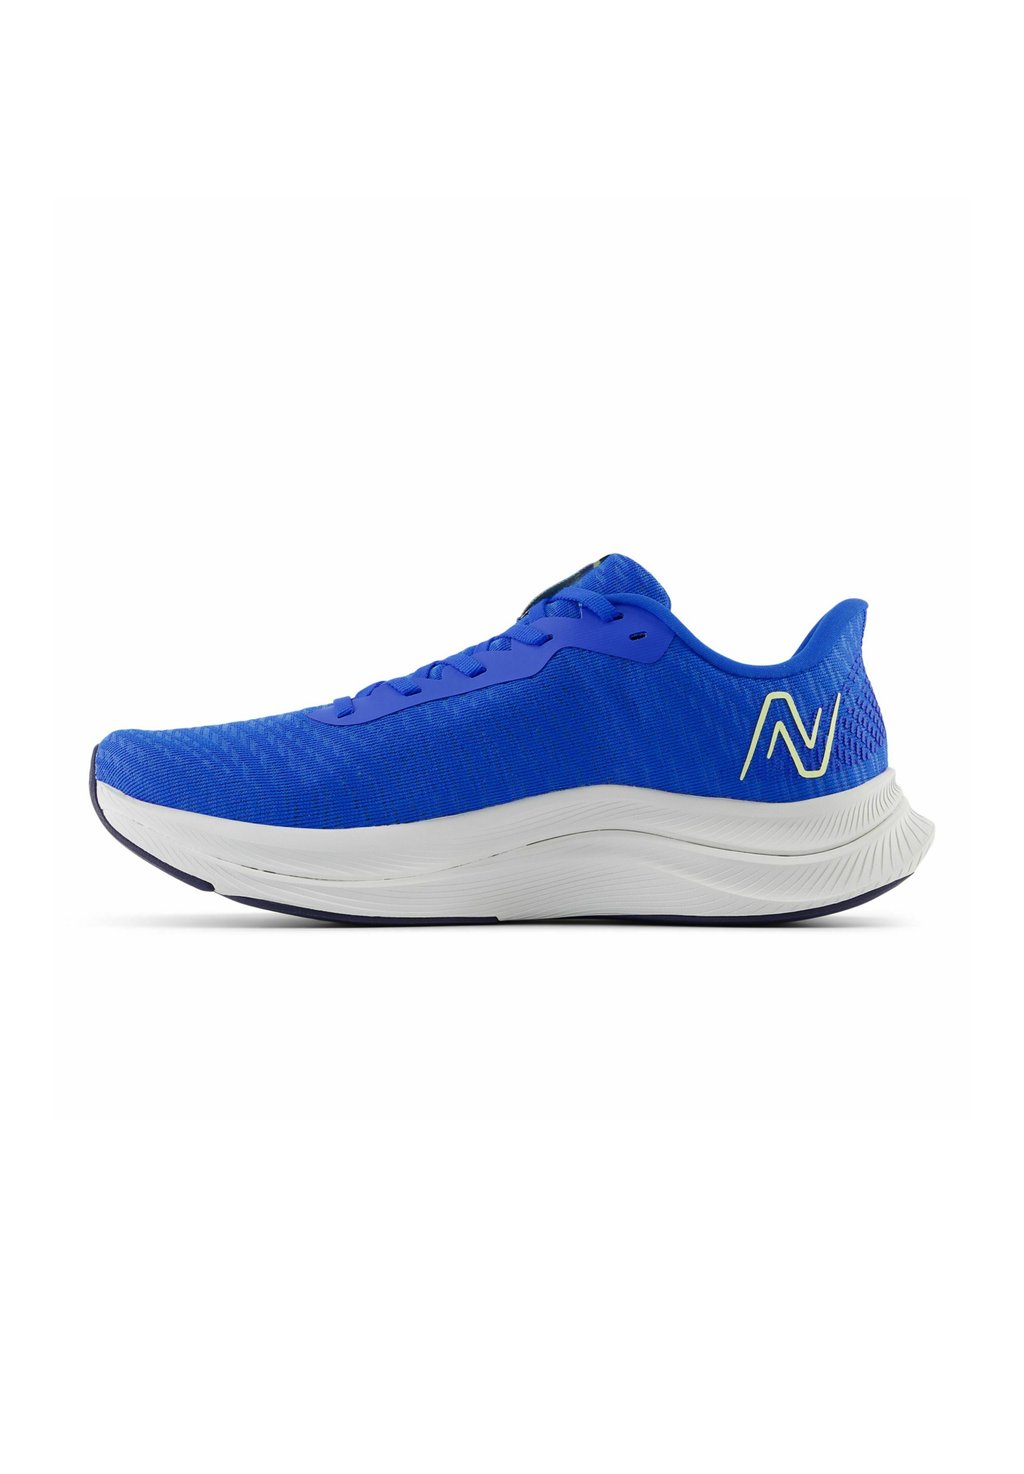 Обувь для ходьбы Fuelcell Propel New Balance, цвет blue nb navy